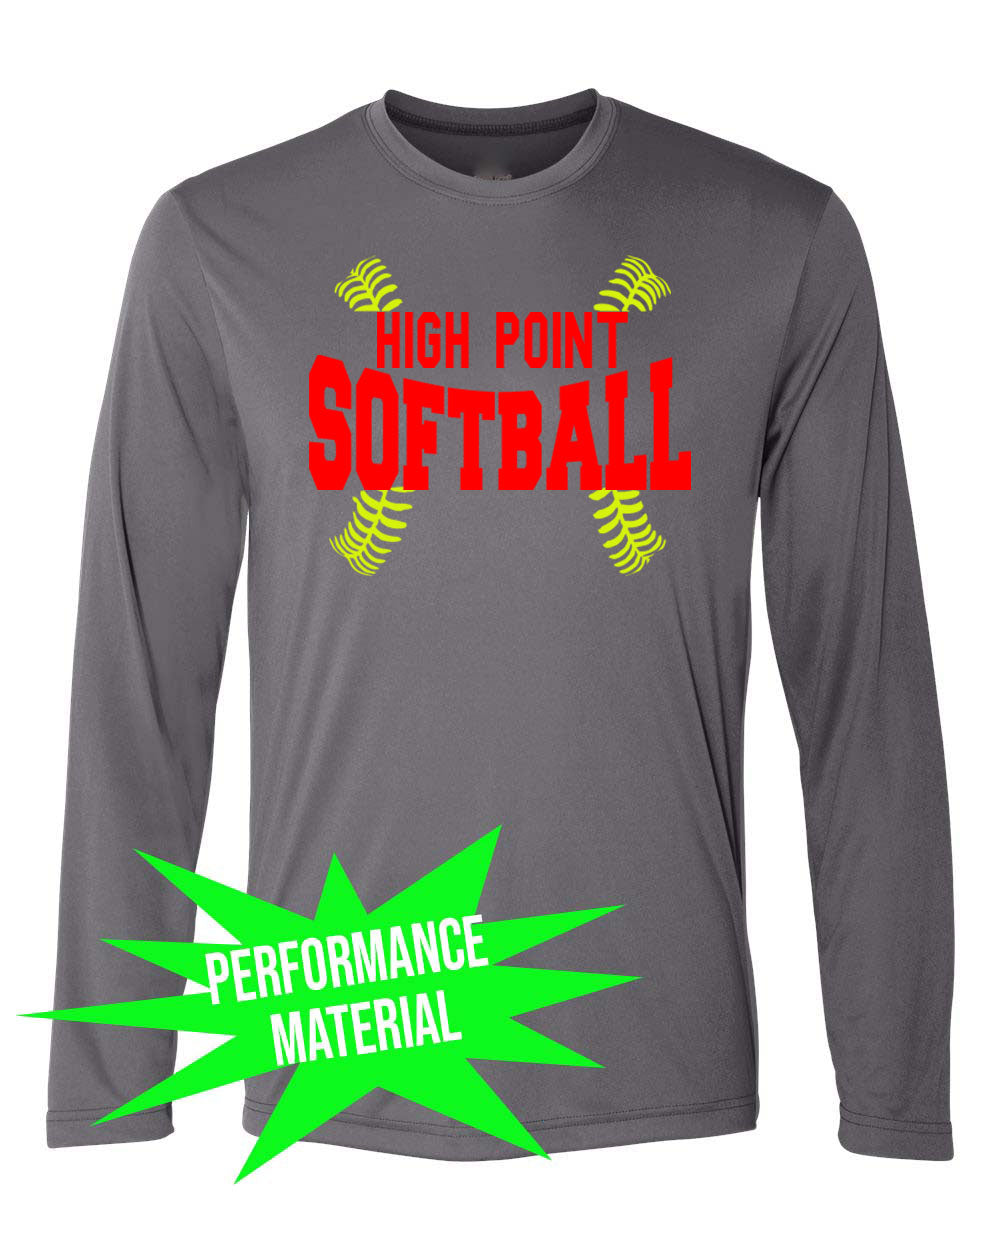 High Point Softball Performance Material Design 1 Long Sleeve Shirt